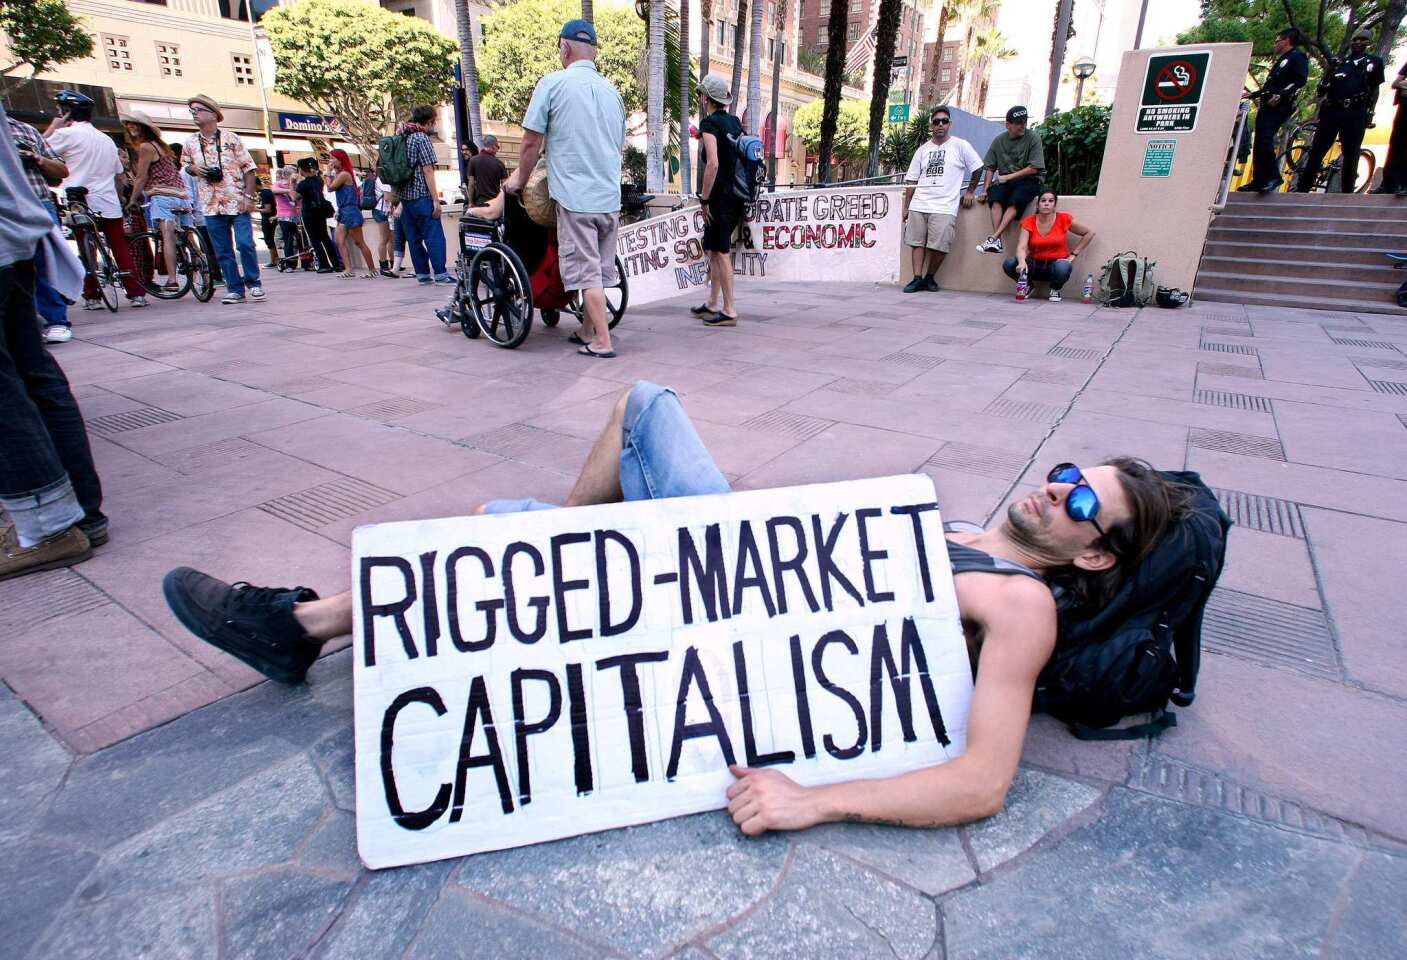 Capitalism protest